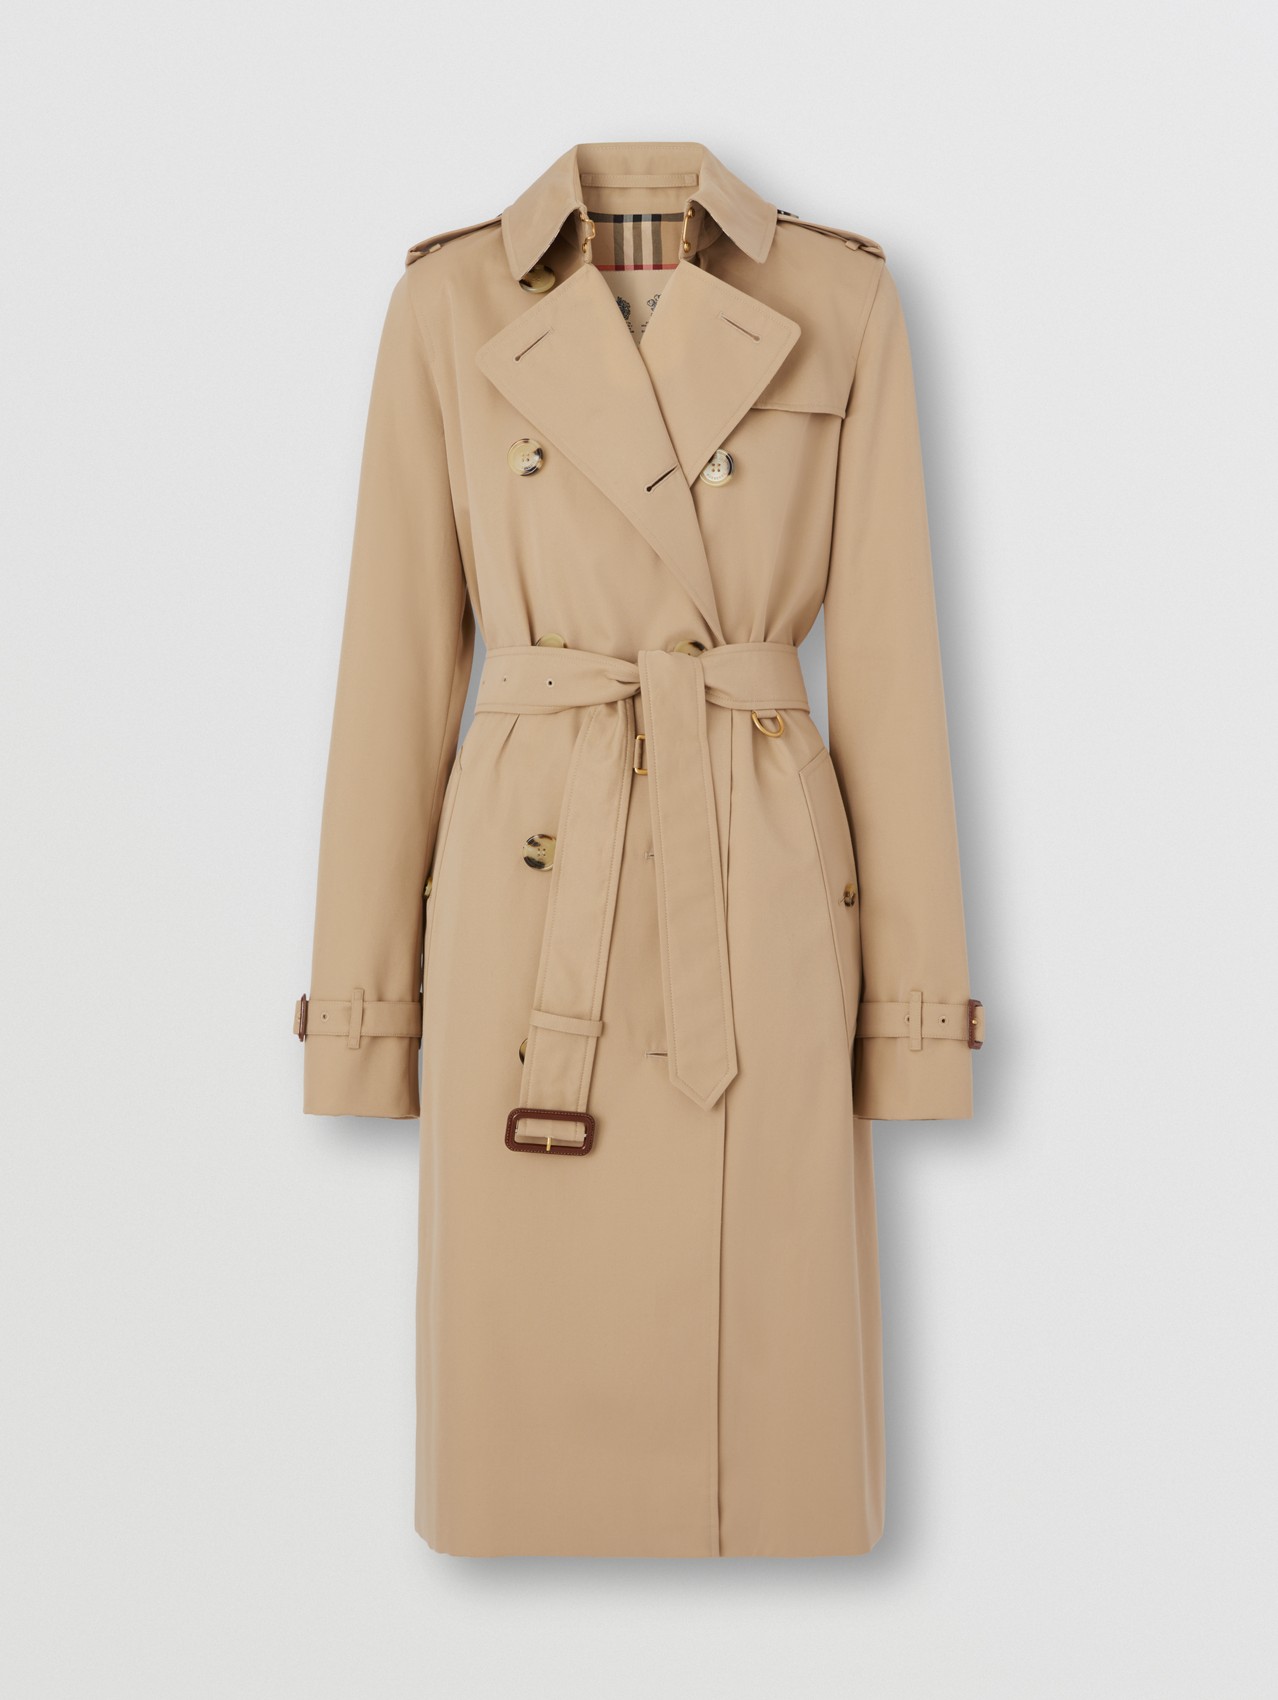 Burberry Baumwolle Mantel in Natur Damen Bekleidung Mäntel Regenjacken und Trenchcoats 